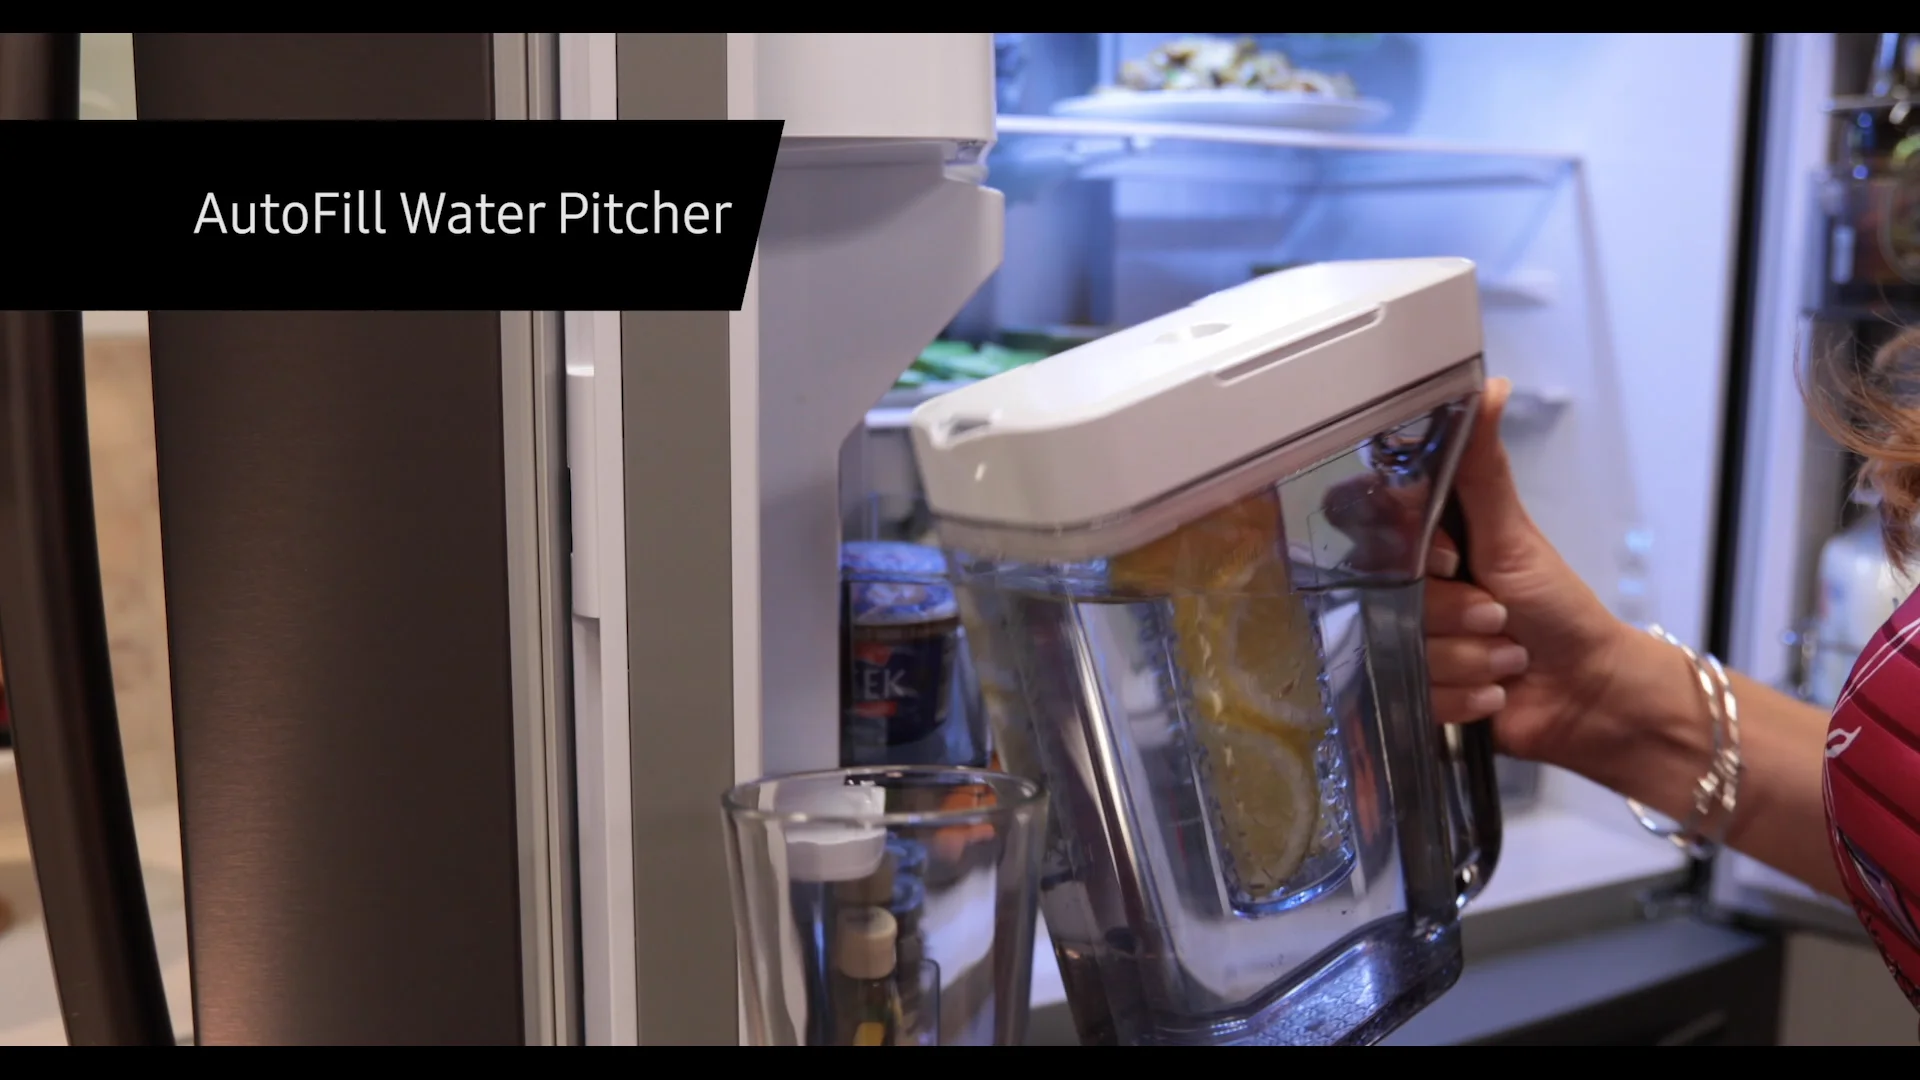 Samsung RF22R7351DT-AA Refrigerator Auto Fill Water Pitcher on Vimeo